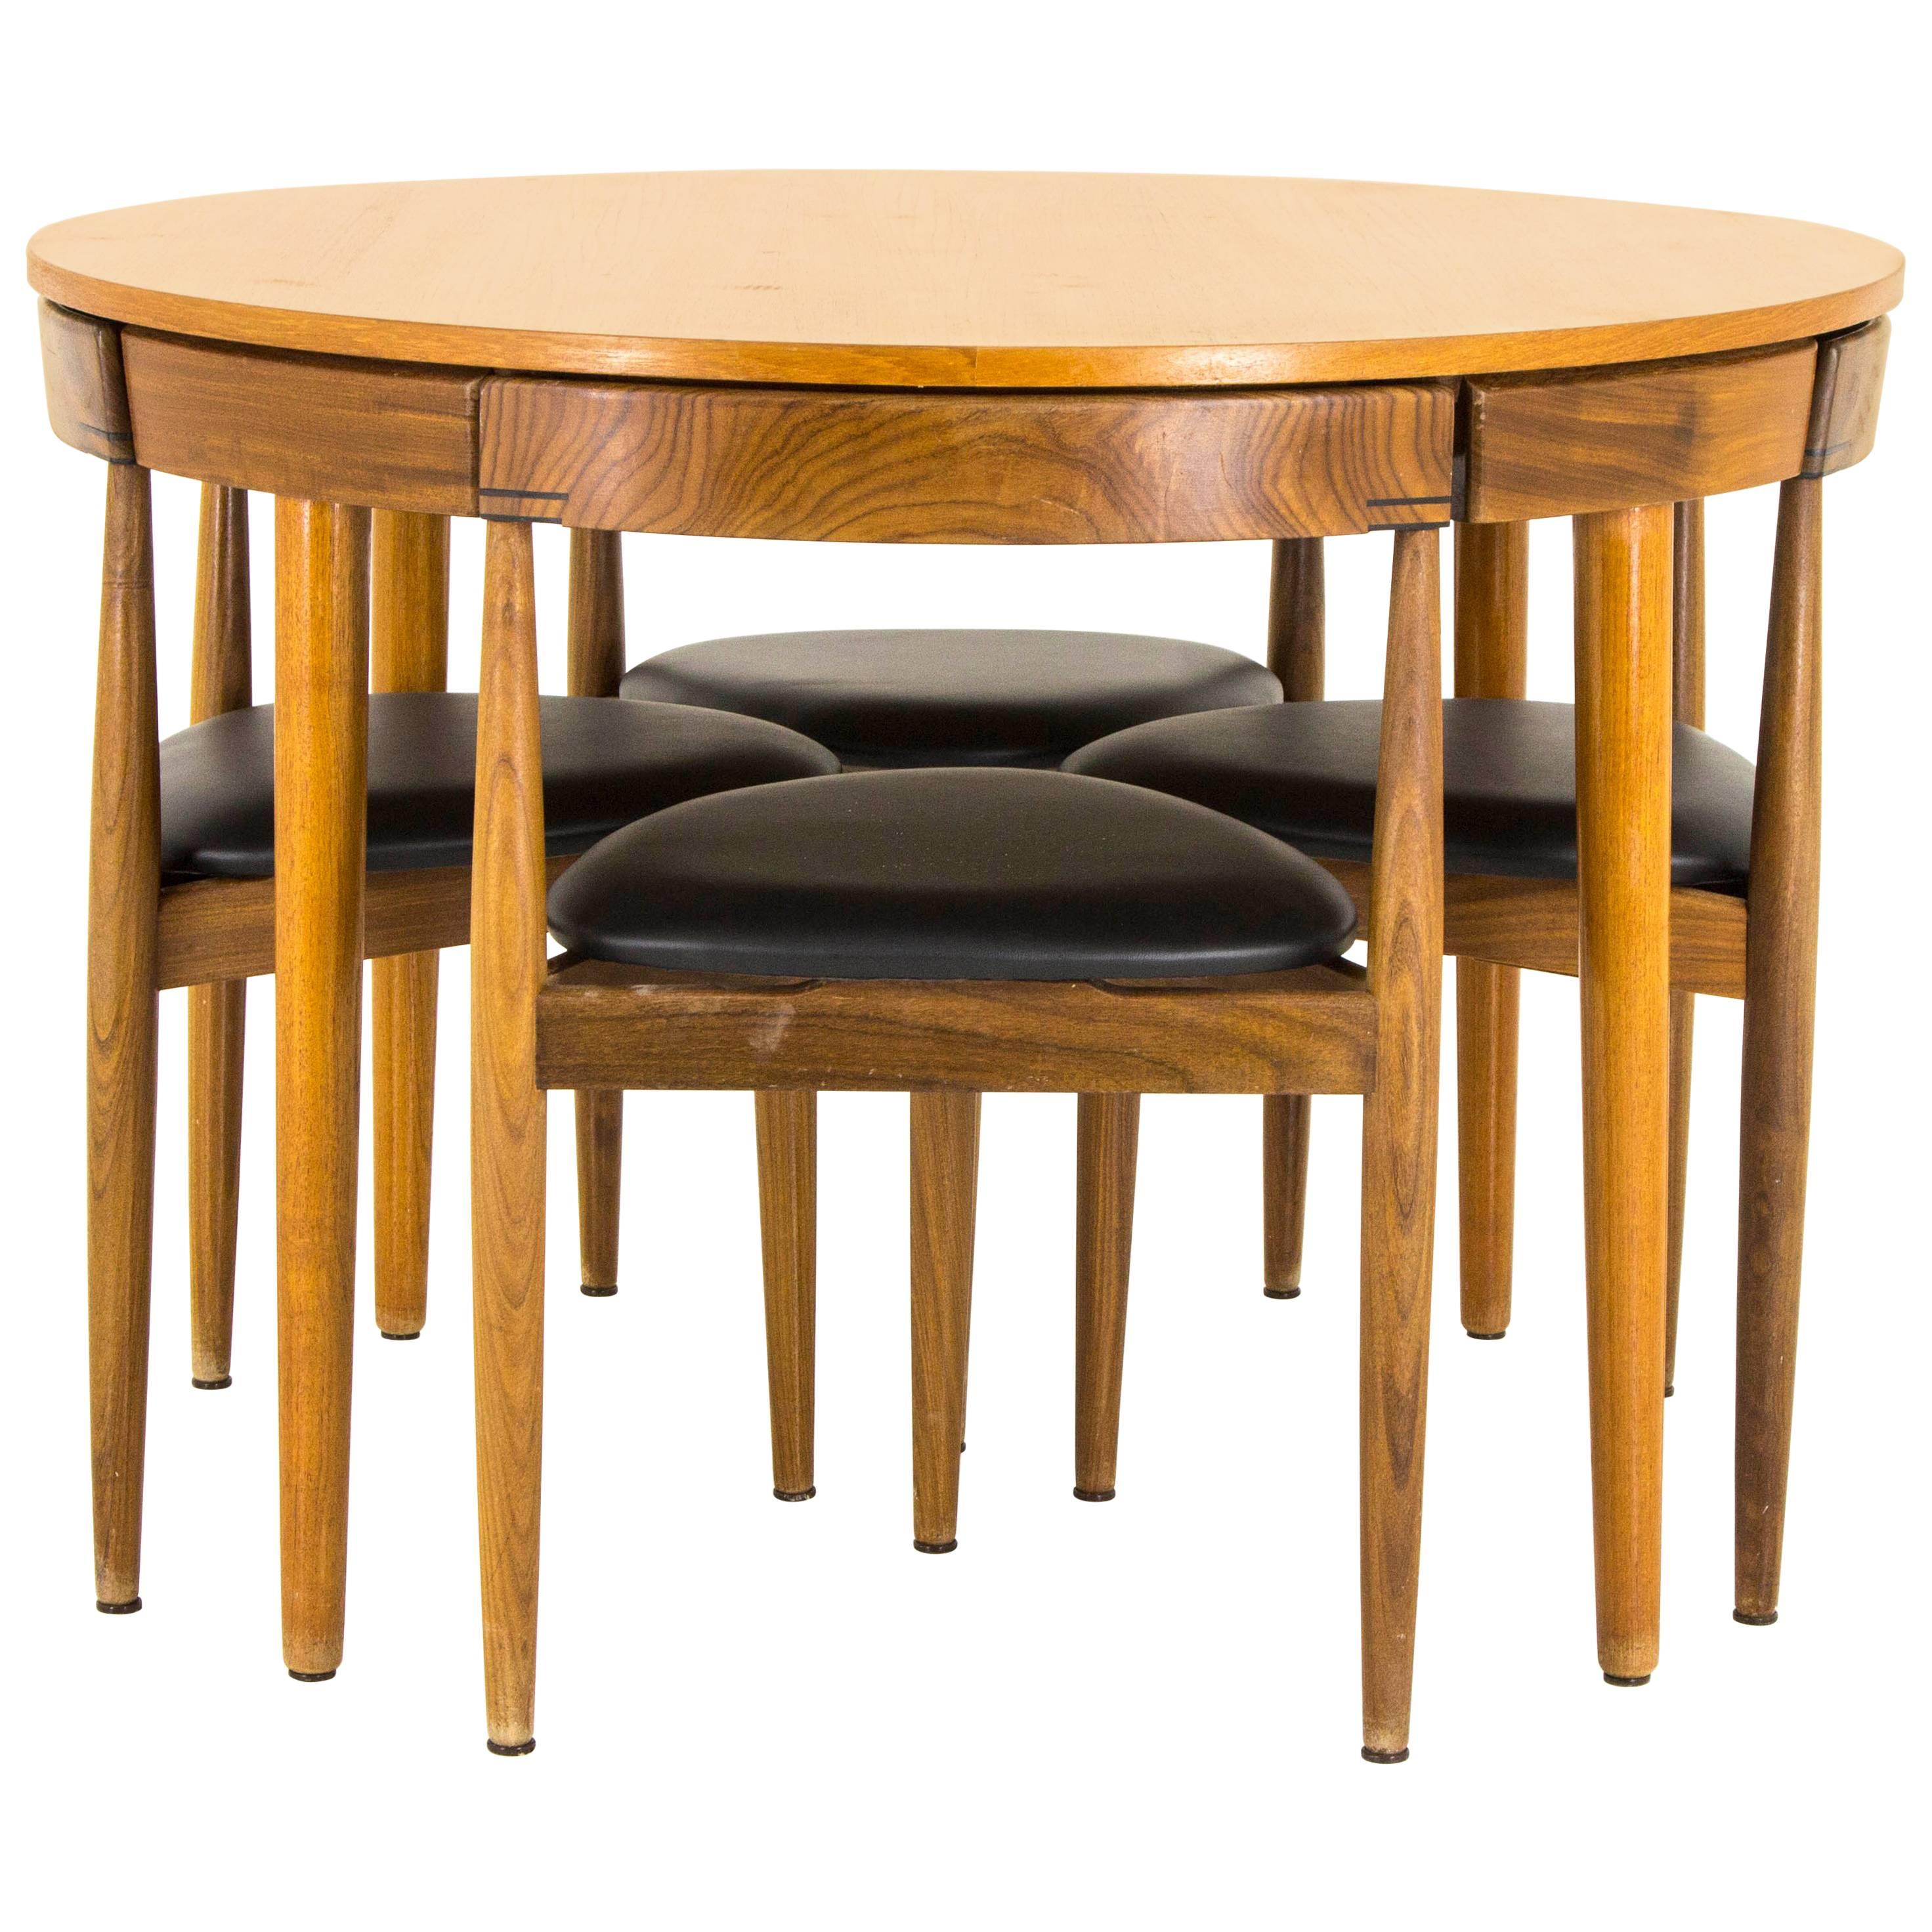 Teak Dining Table, Mid-Century Modern, Danish Teak, Frem Rojle Design